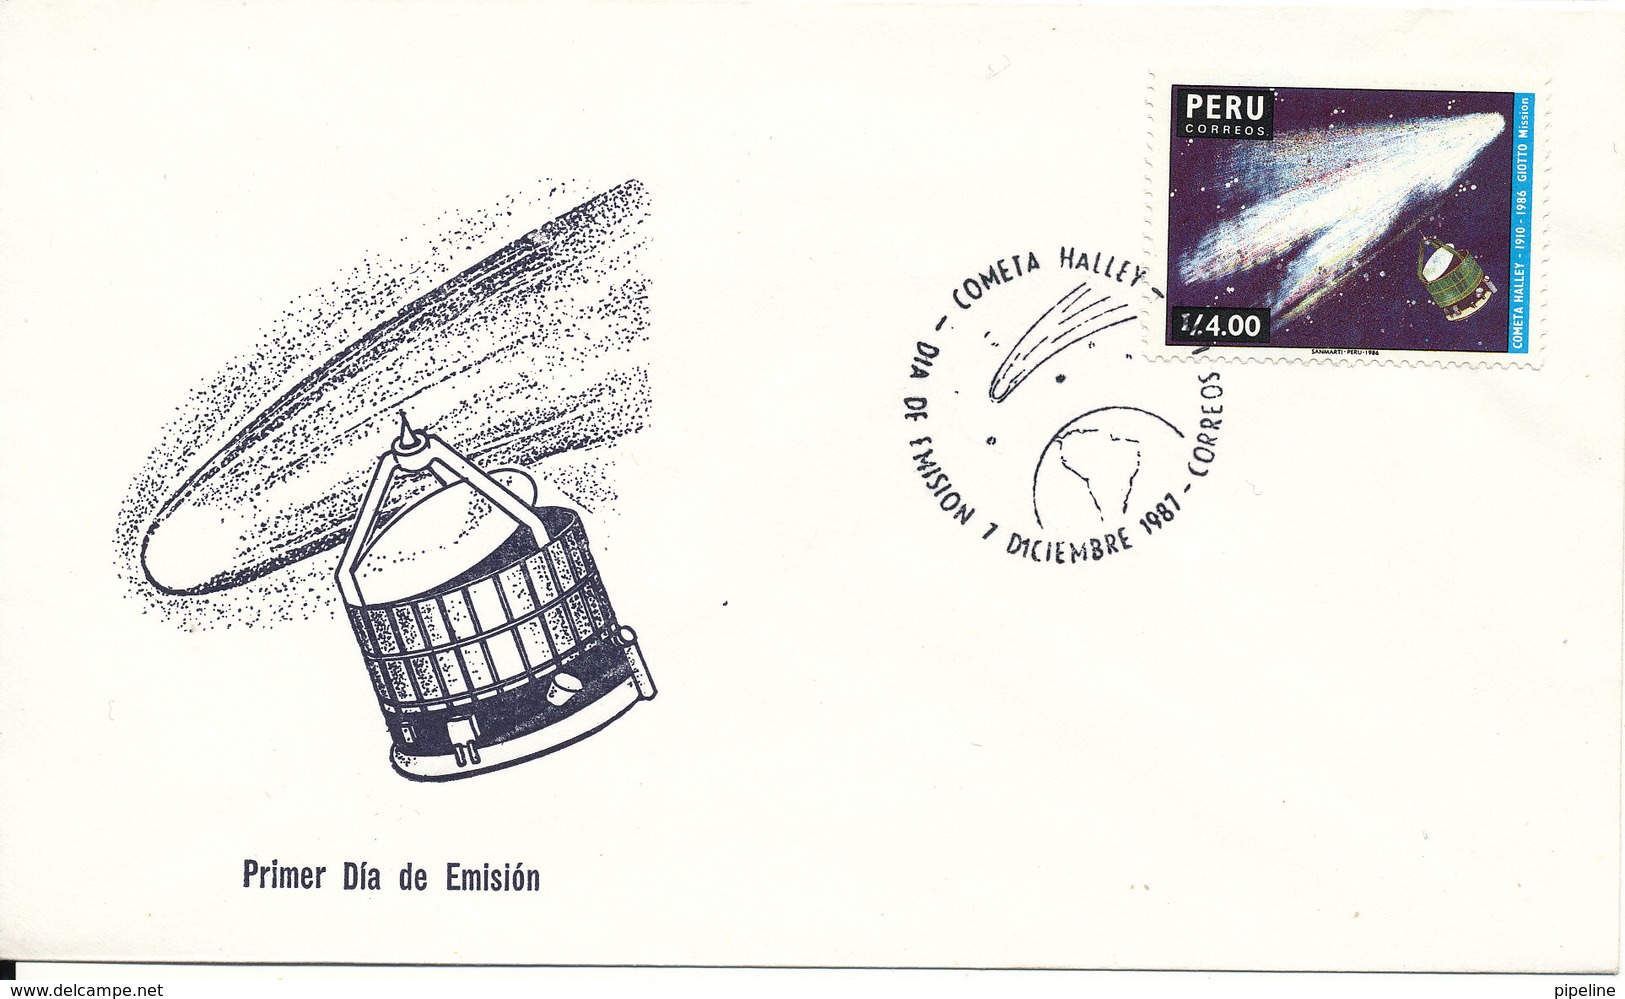 Peru FDC 1-12-1987 Halley's Comet With Cachet - Peru